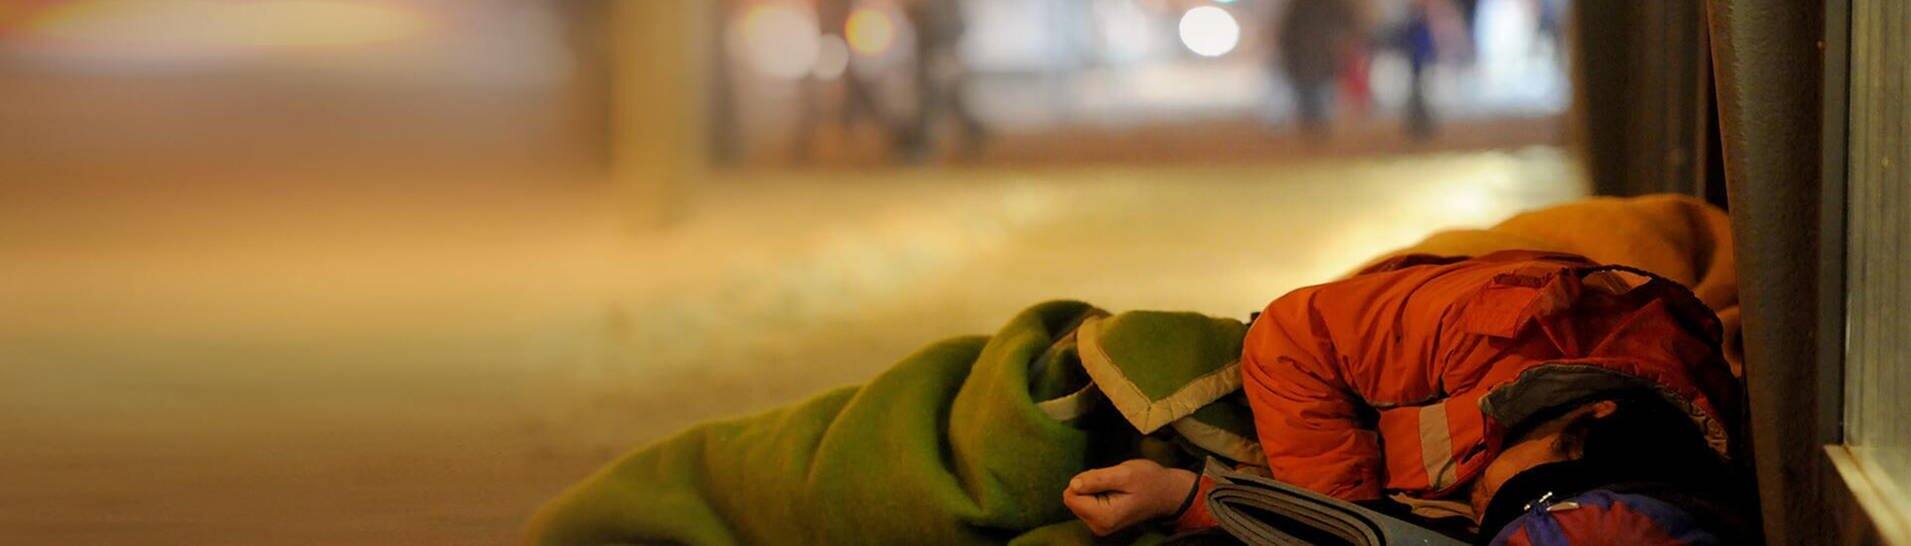 Kältebus kümmert sich um Obdachlose (Foto: (c) dpa)